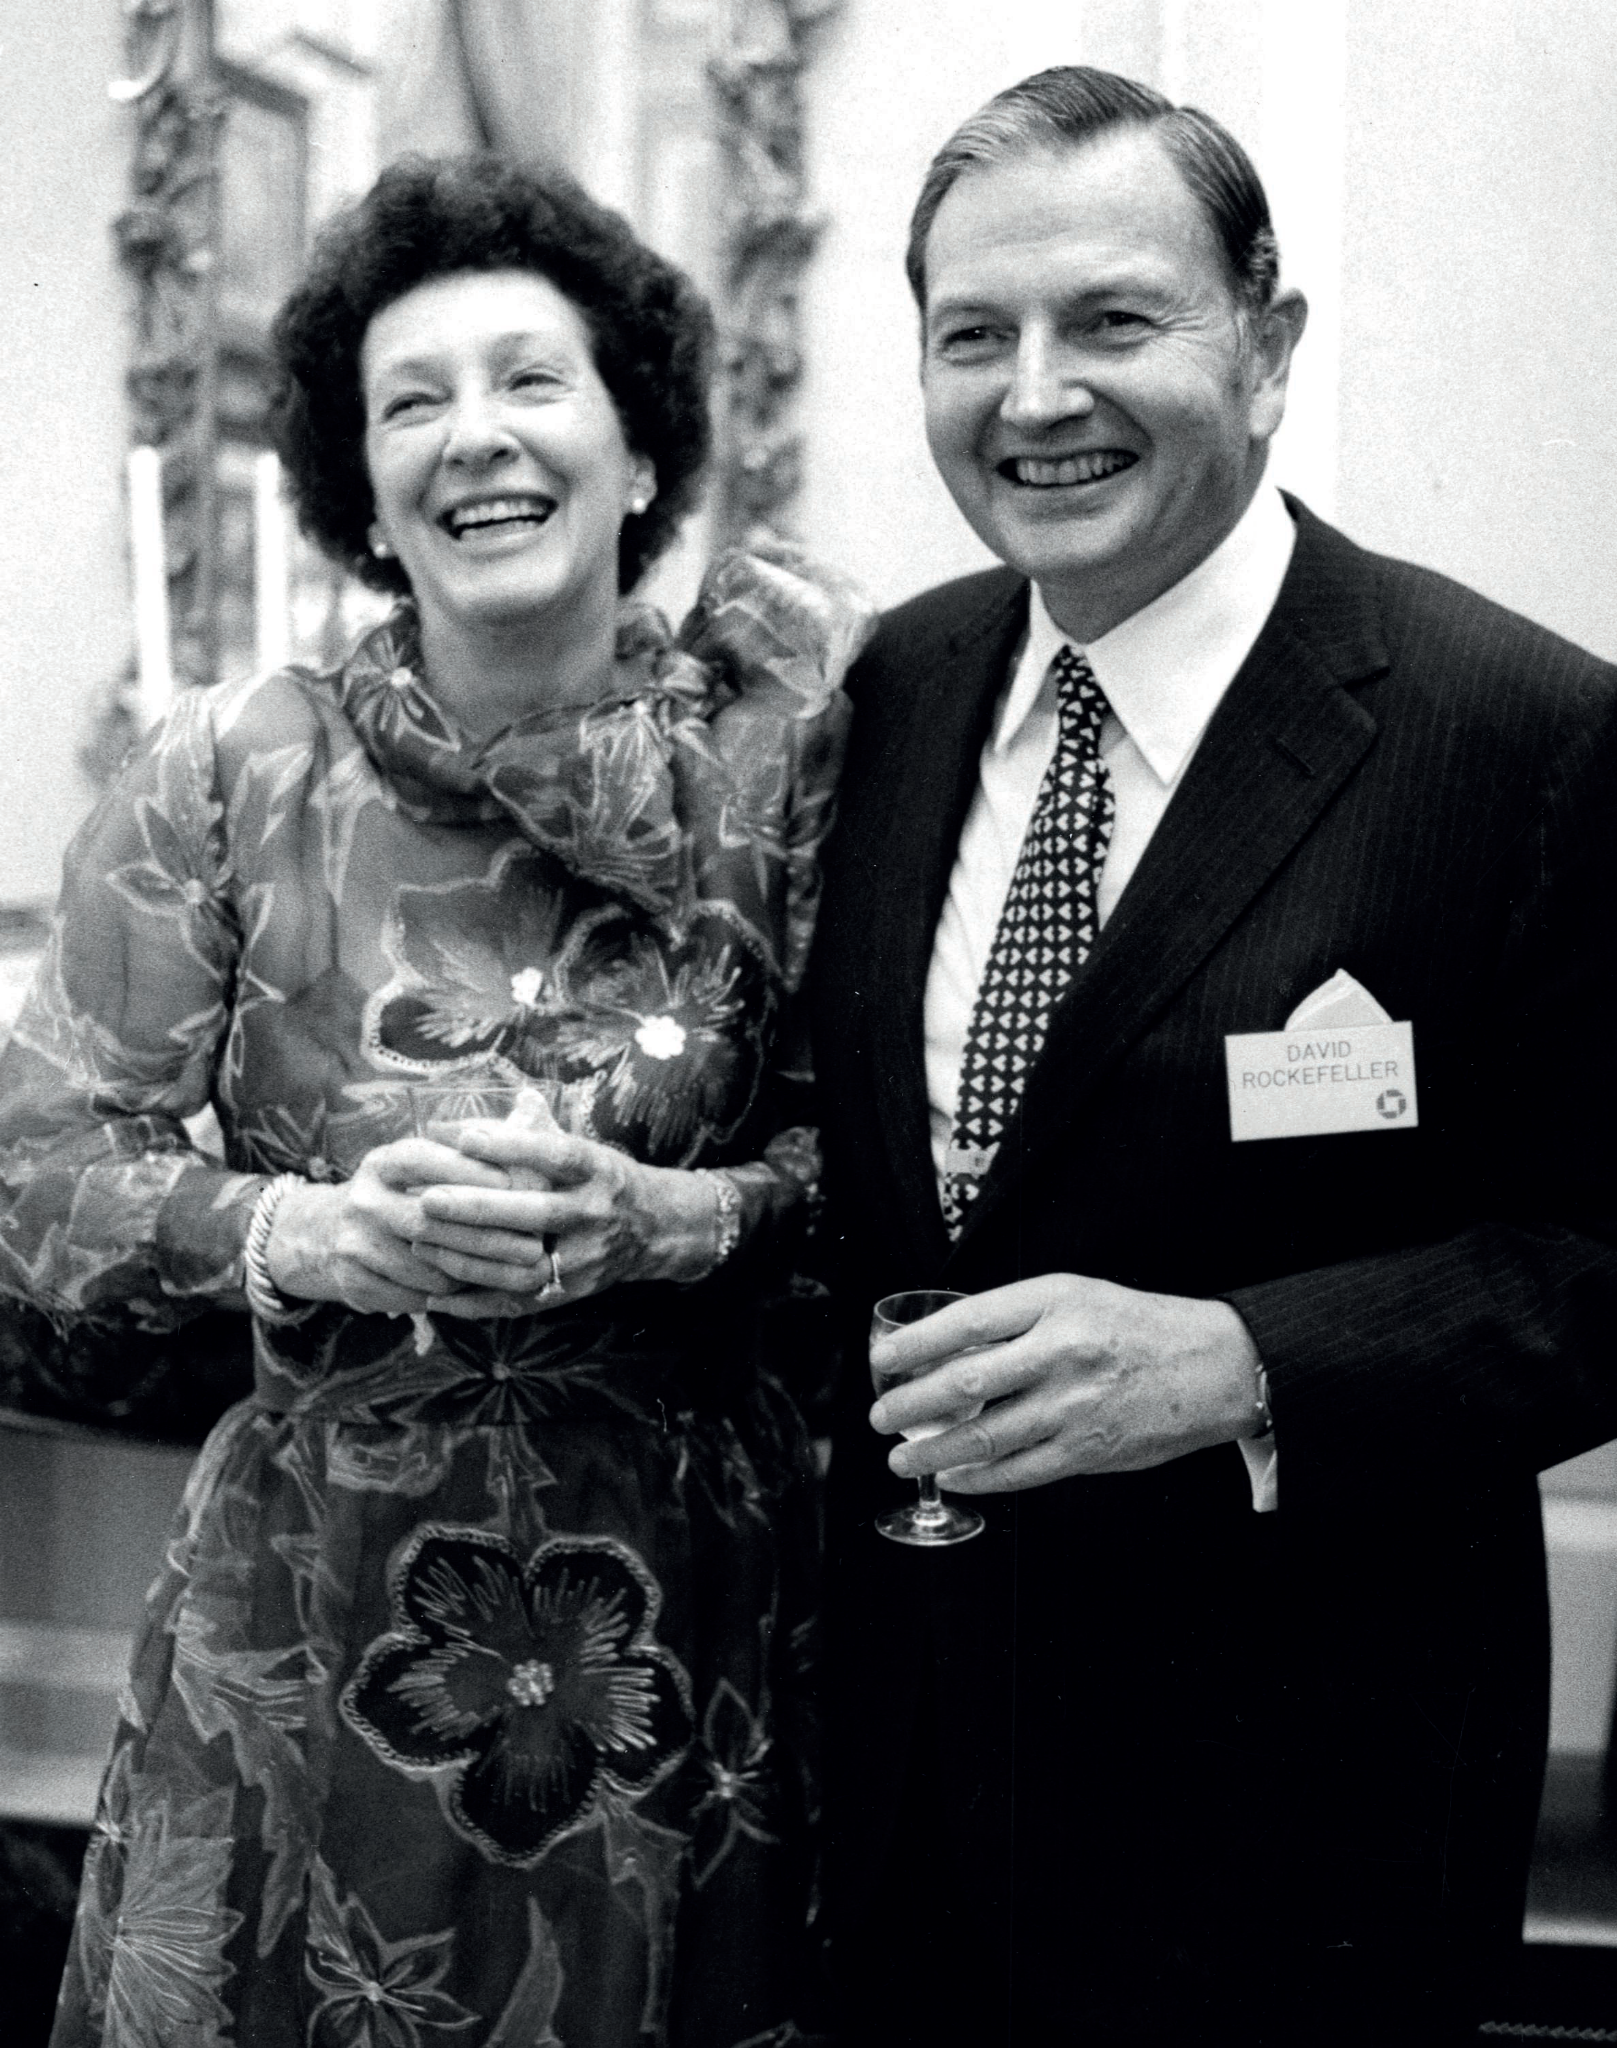 Rockefeller Archive Center - Happy anniversary to John D